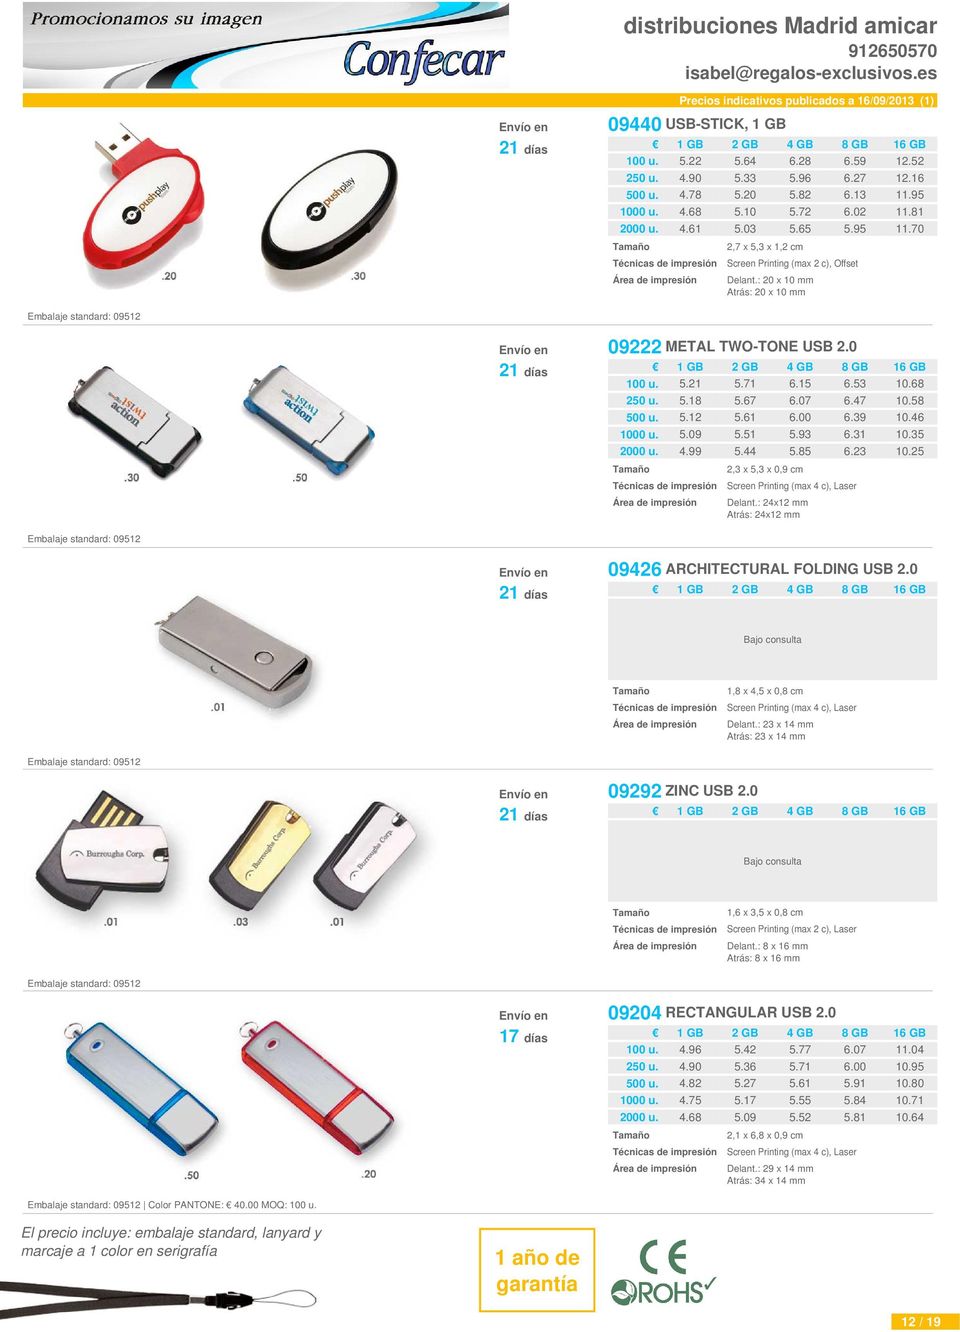 68 10.58 10.46 10.35 10.25 09426 ARCHITECTURAL FOLDING USB 2.0 Bajo consulta 1,8 x 4,5 x 0,8 cm Delant.: 23 x 14 mm Atrás: 23 x 14 mm 09292 ZINC USB 2.